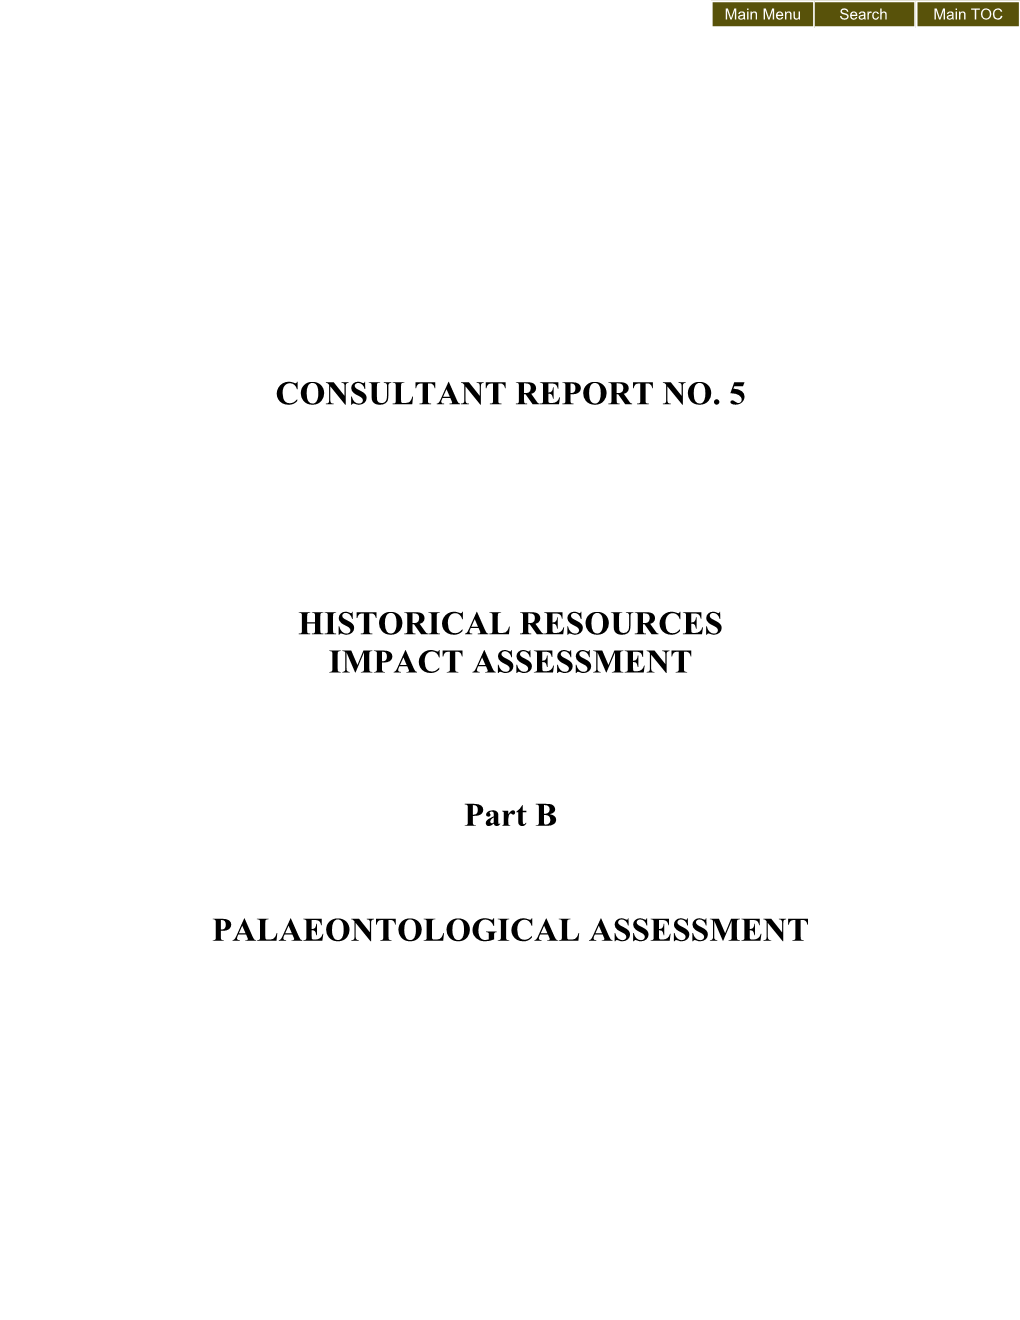 Volume 4 Consultants Reports. CR